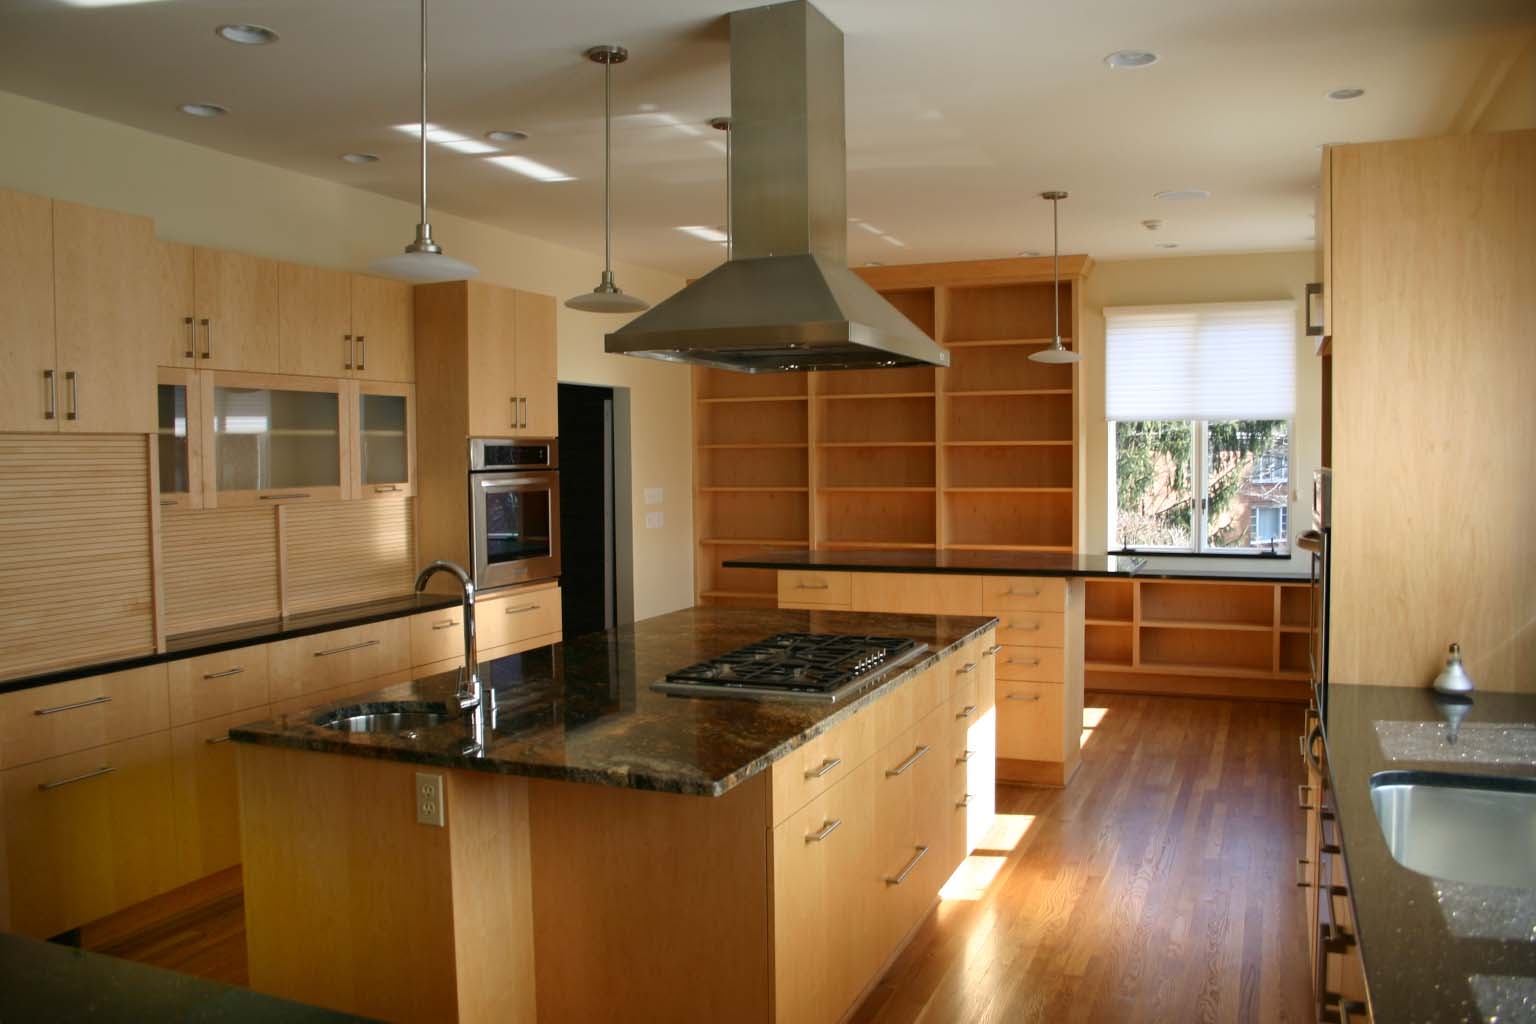 Kitchen design ideas light maple cabinets